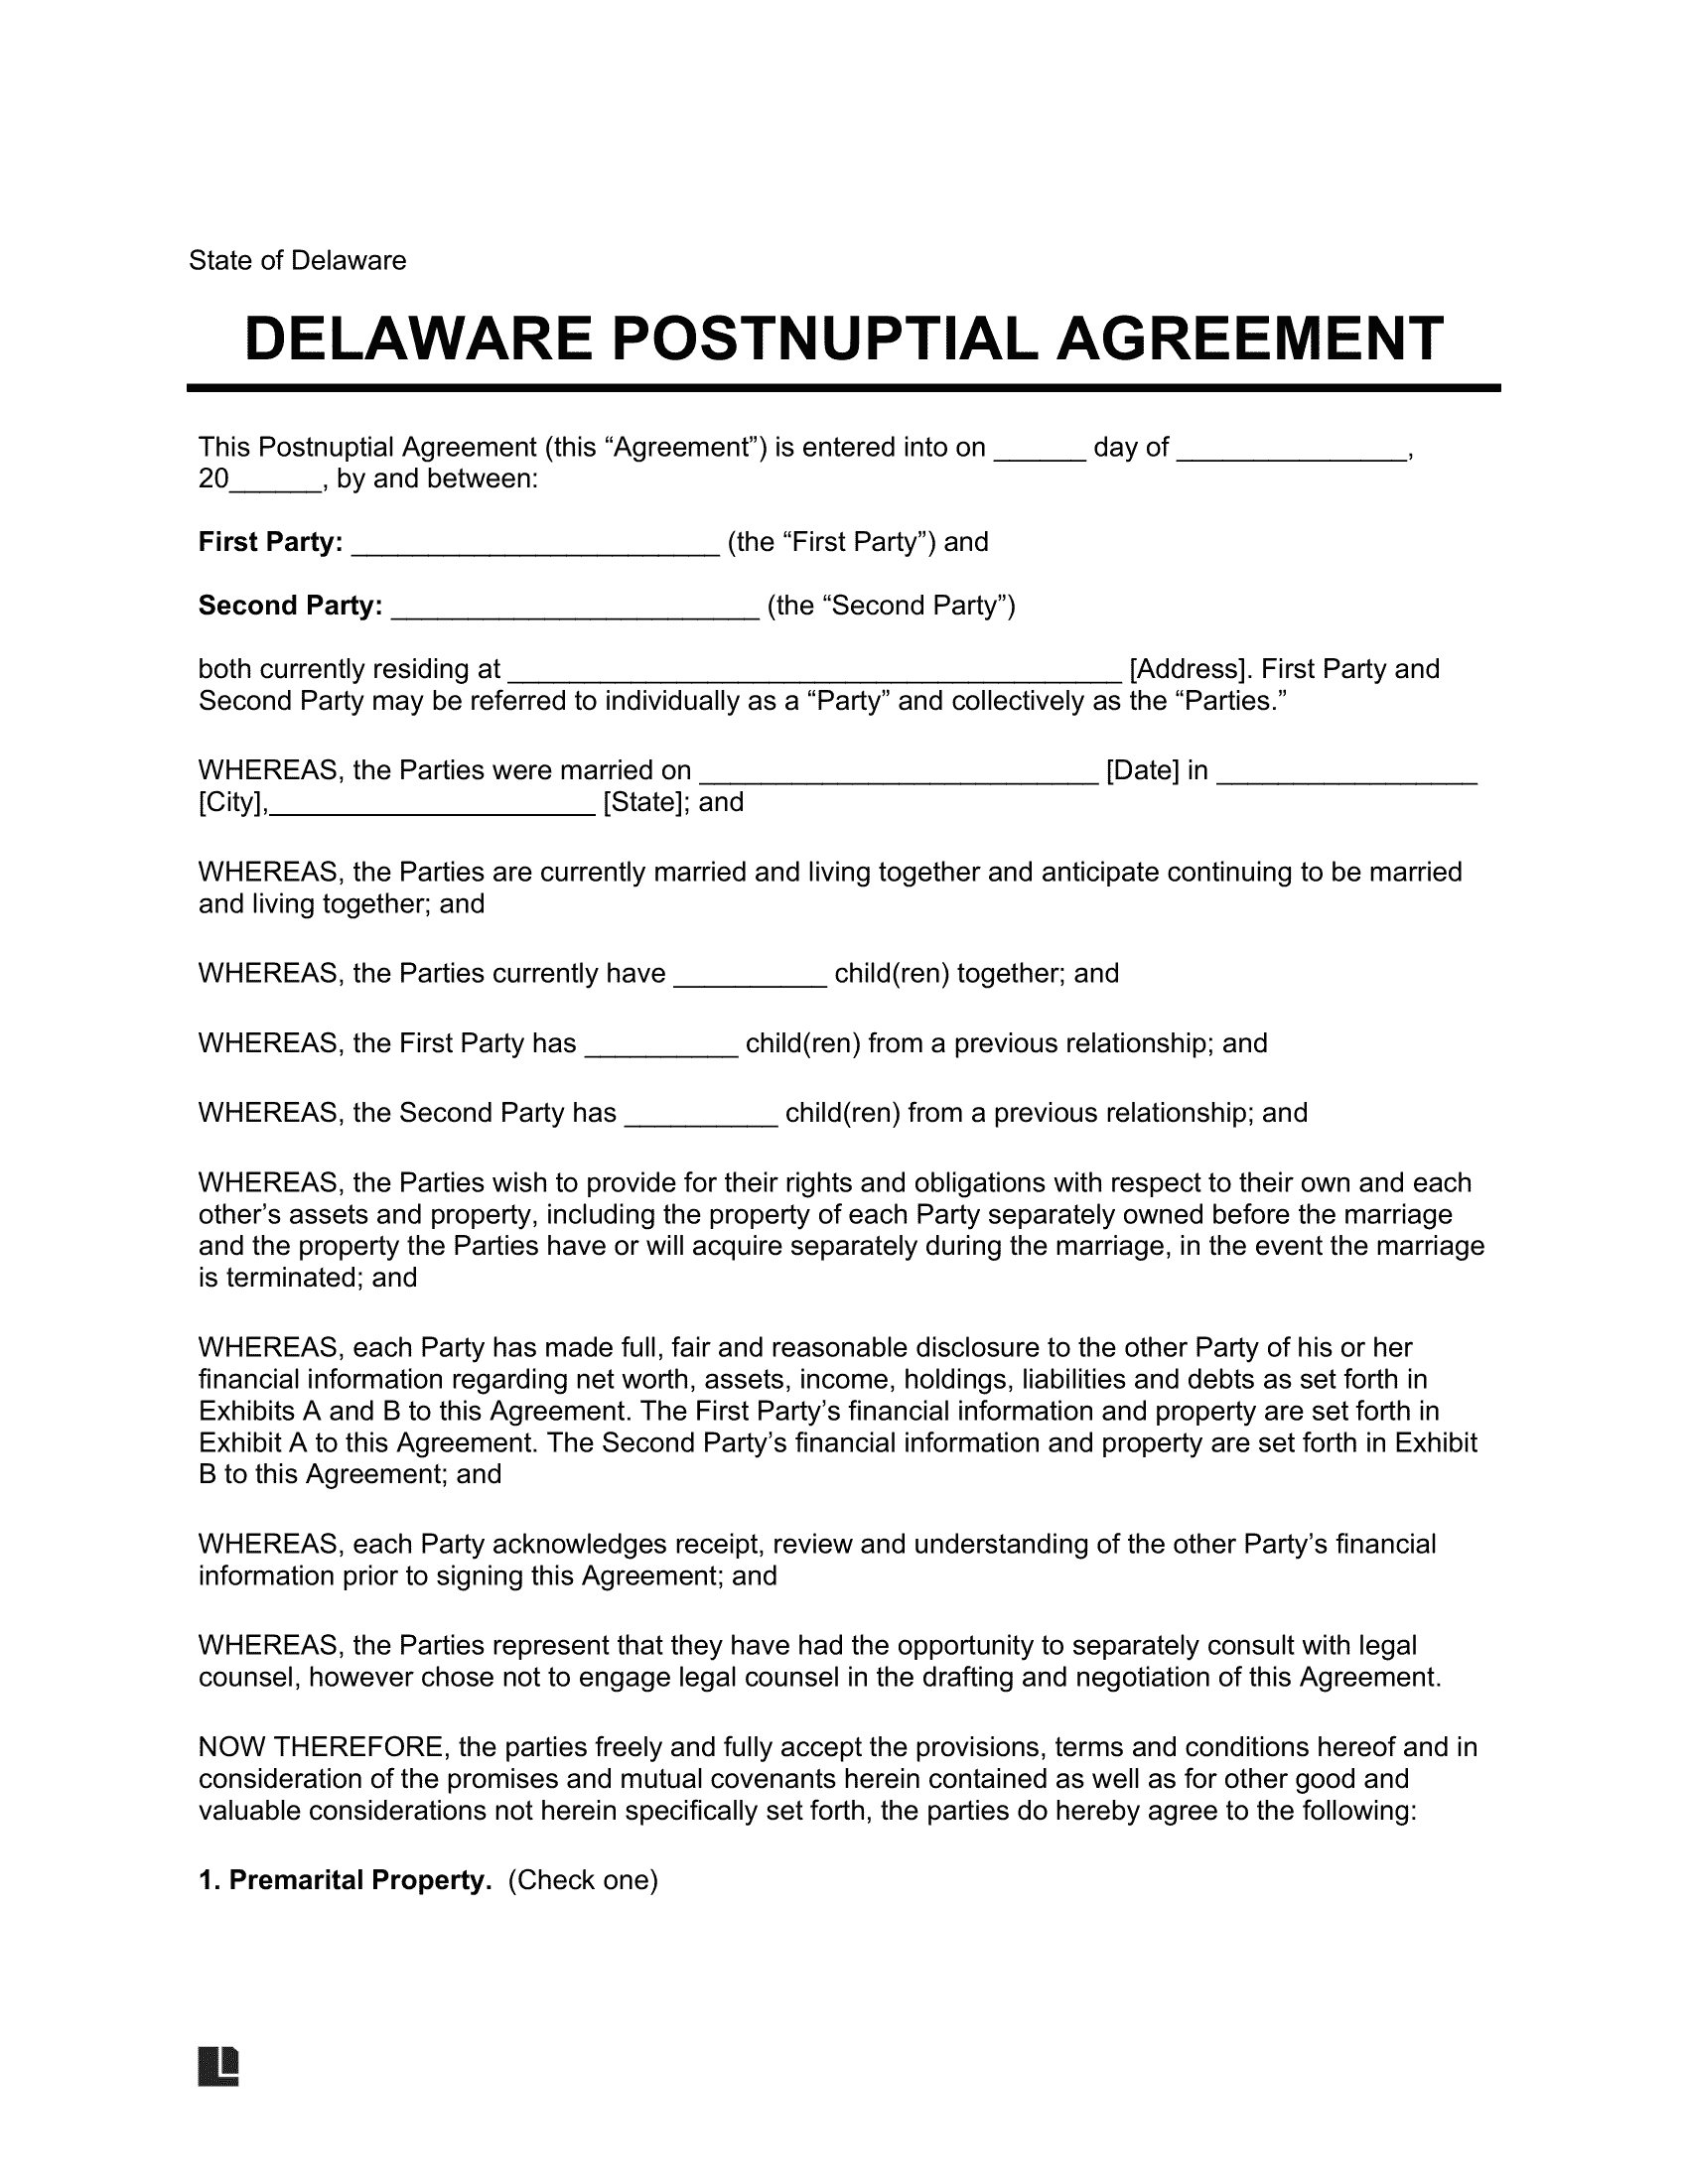 Delaware Postnuptial Agreement Template